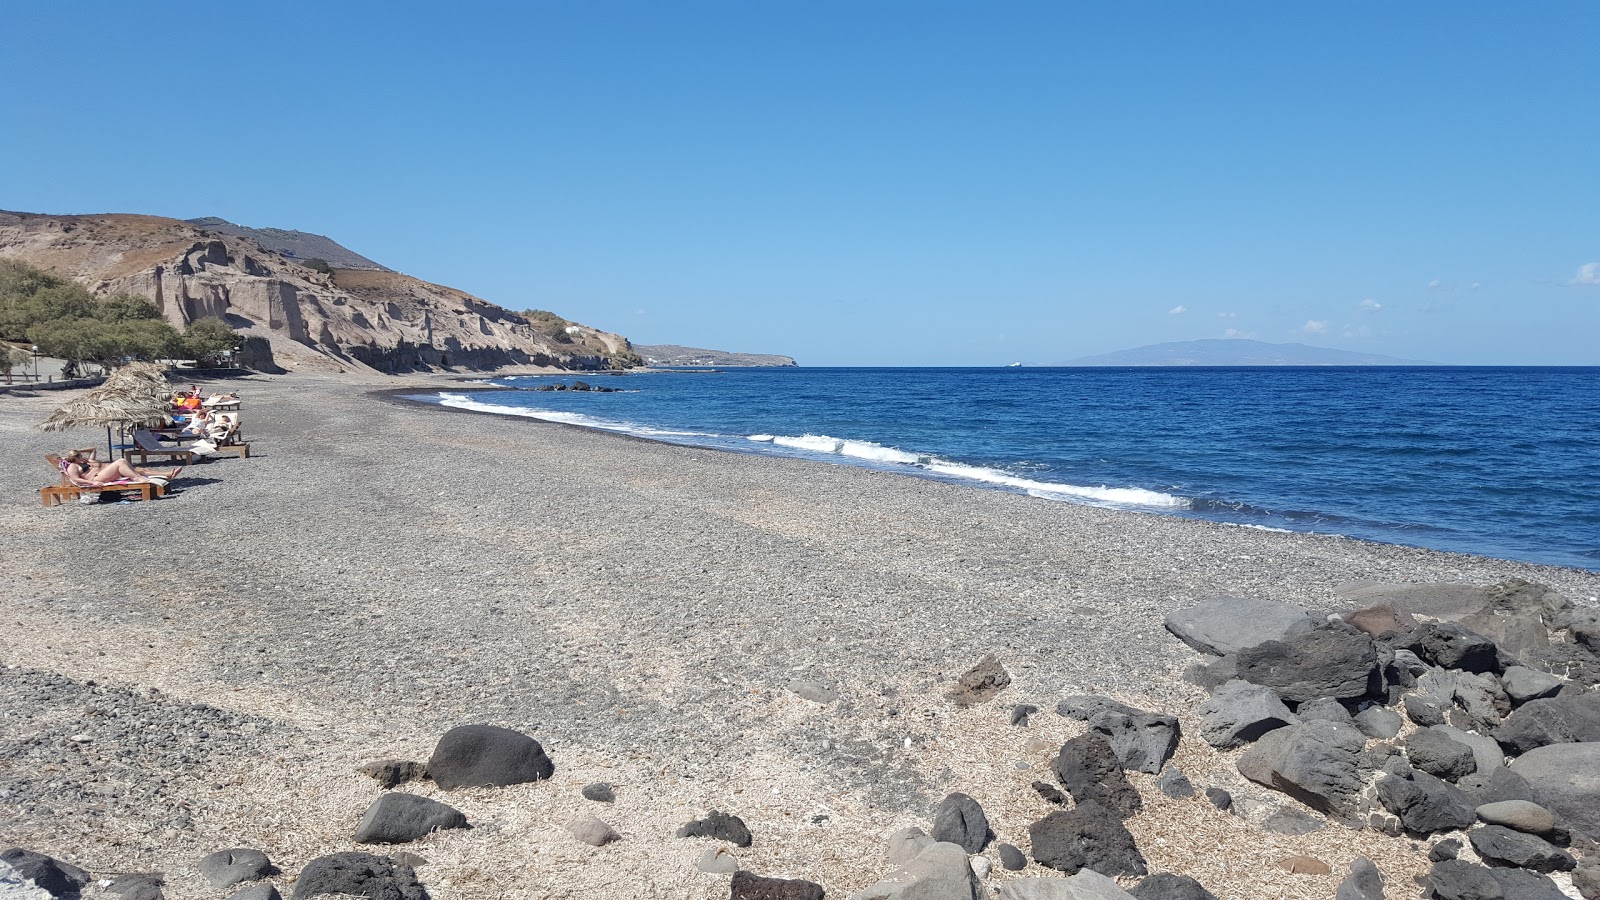 Foto di Vourvoulos beach con una superficie del sabbia con ciottolame